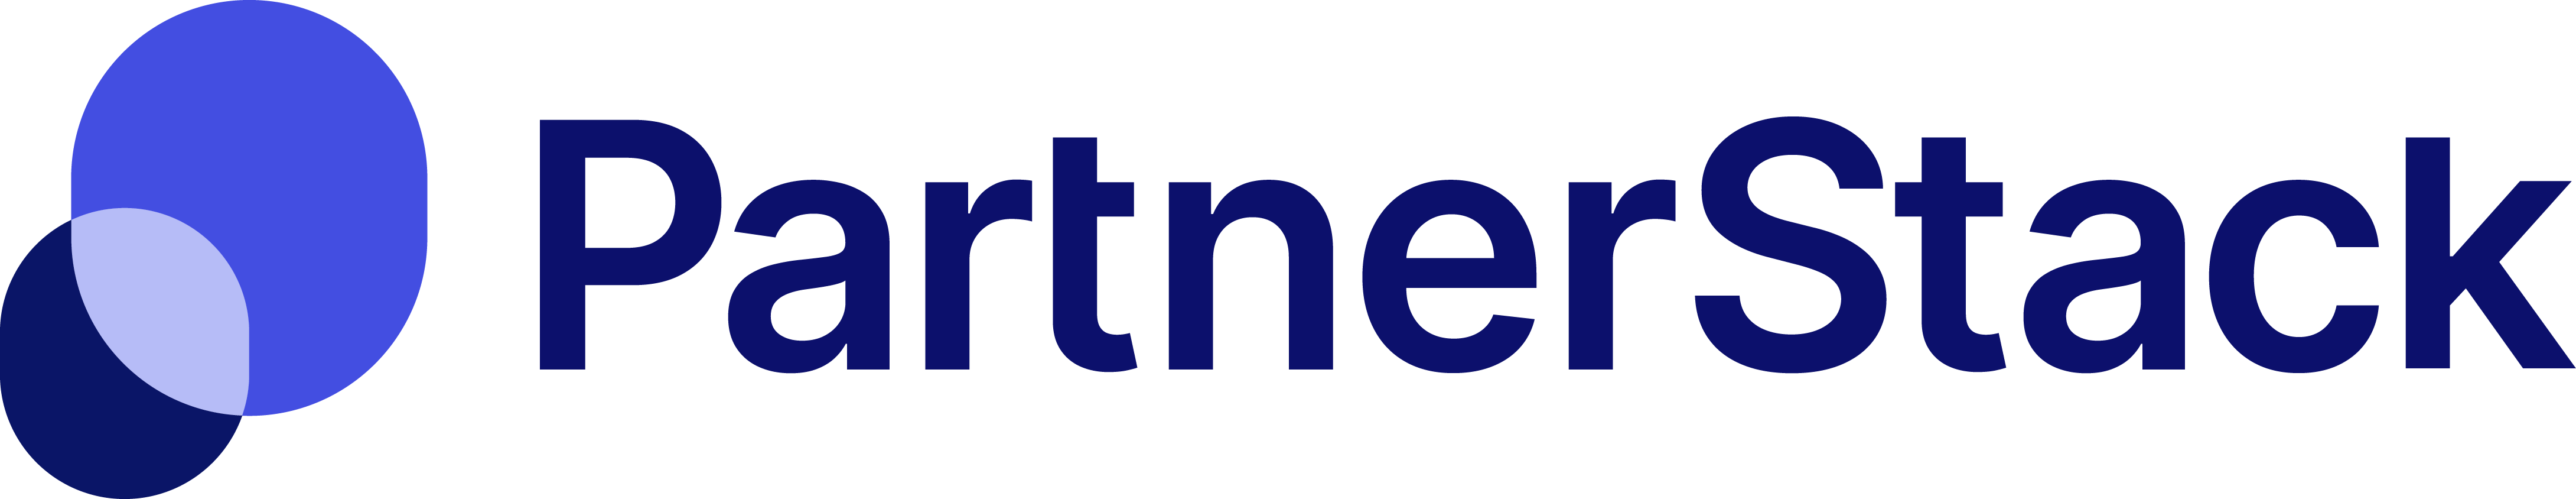 Partnerstack Logo